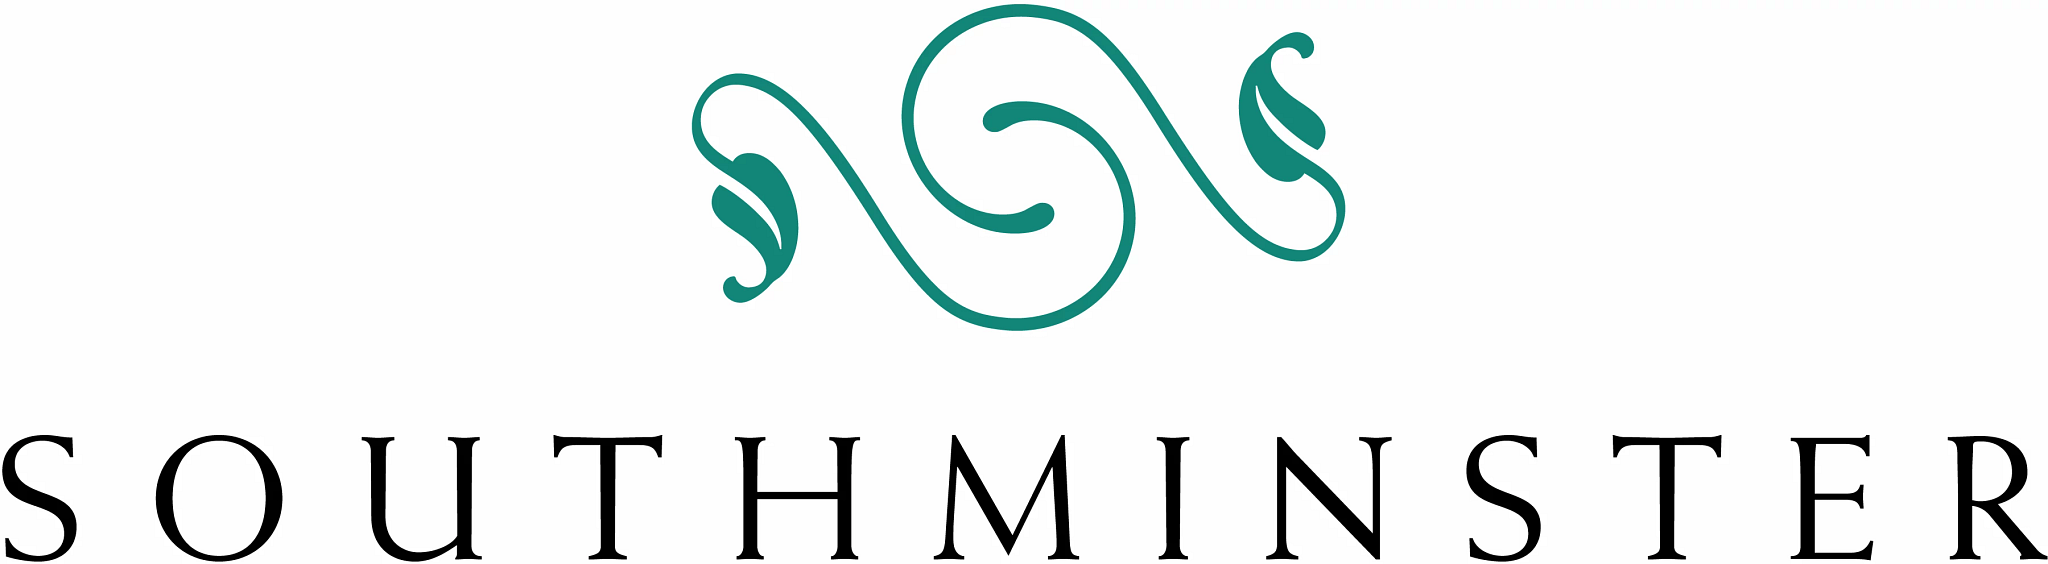 Southminster Logo